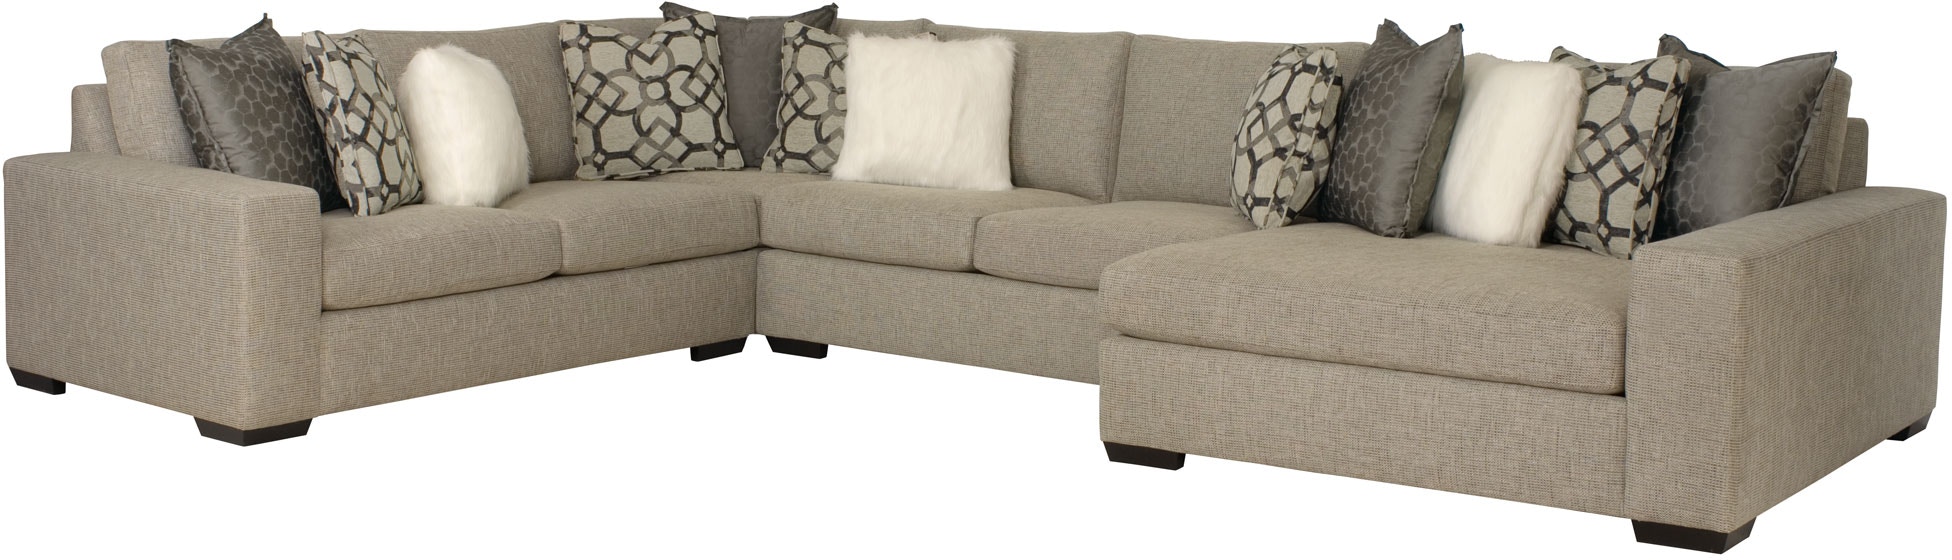 Bernhardt Furniture B6542 B6532 B6540 B6537 Living Room Orlando